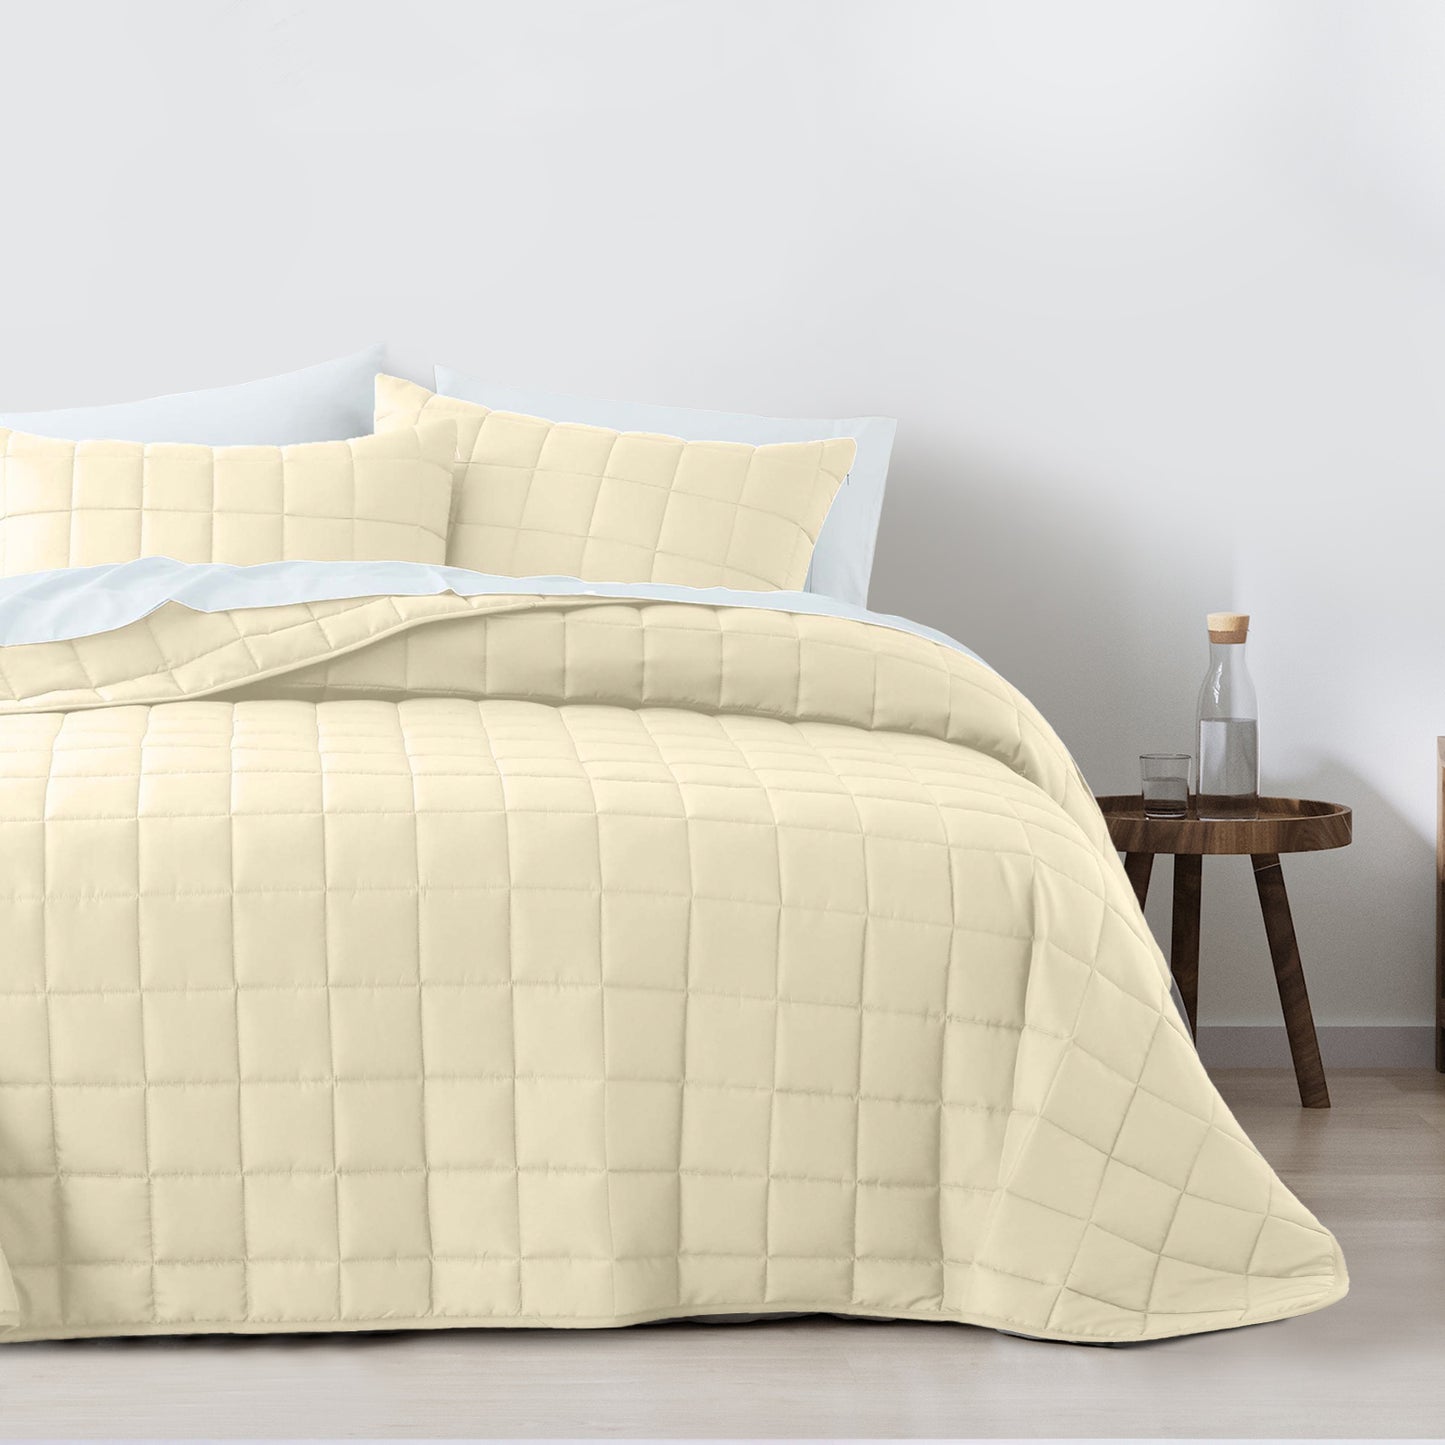 Royal Comfort Coverlet Set Bedspread Soft Touch Easy Care Breathable 3 Piece Set - Queen - Beige - BM House & Garden